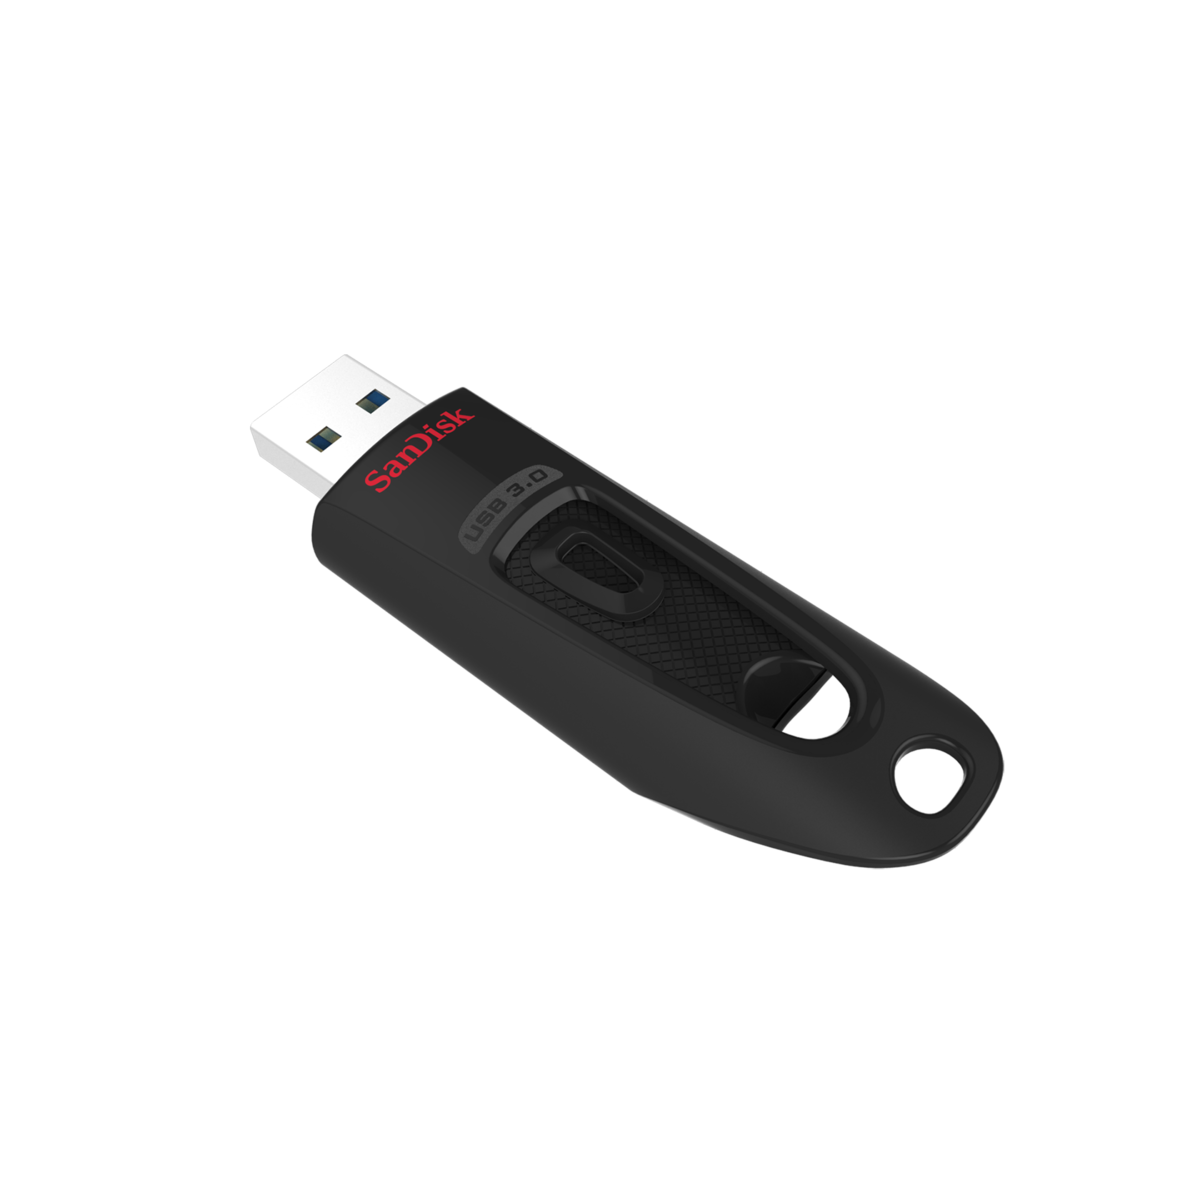 Persoon belast met sportgame Accommodatie vers SanDisk Ultra - USB flash drive - 64 GB - USB 3.0 - sleek black | Dell USA